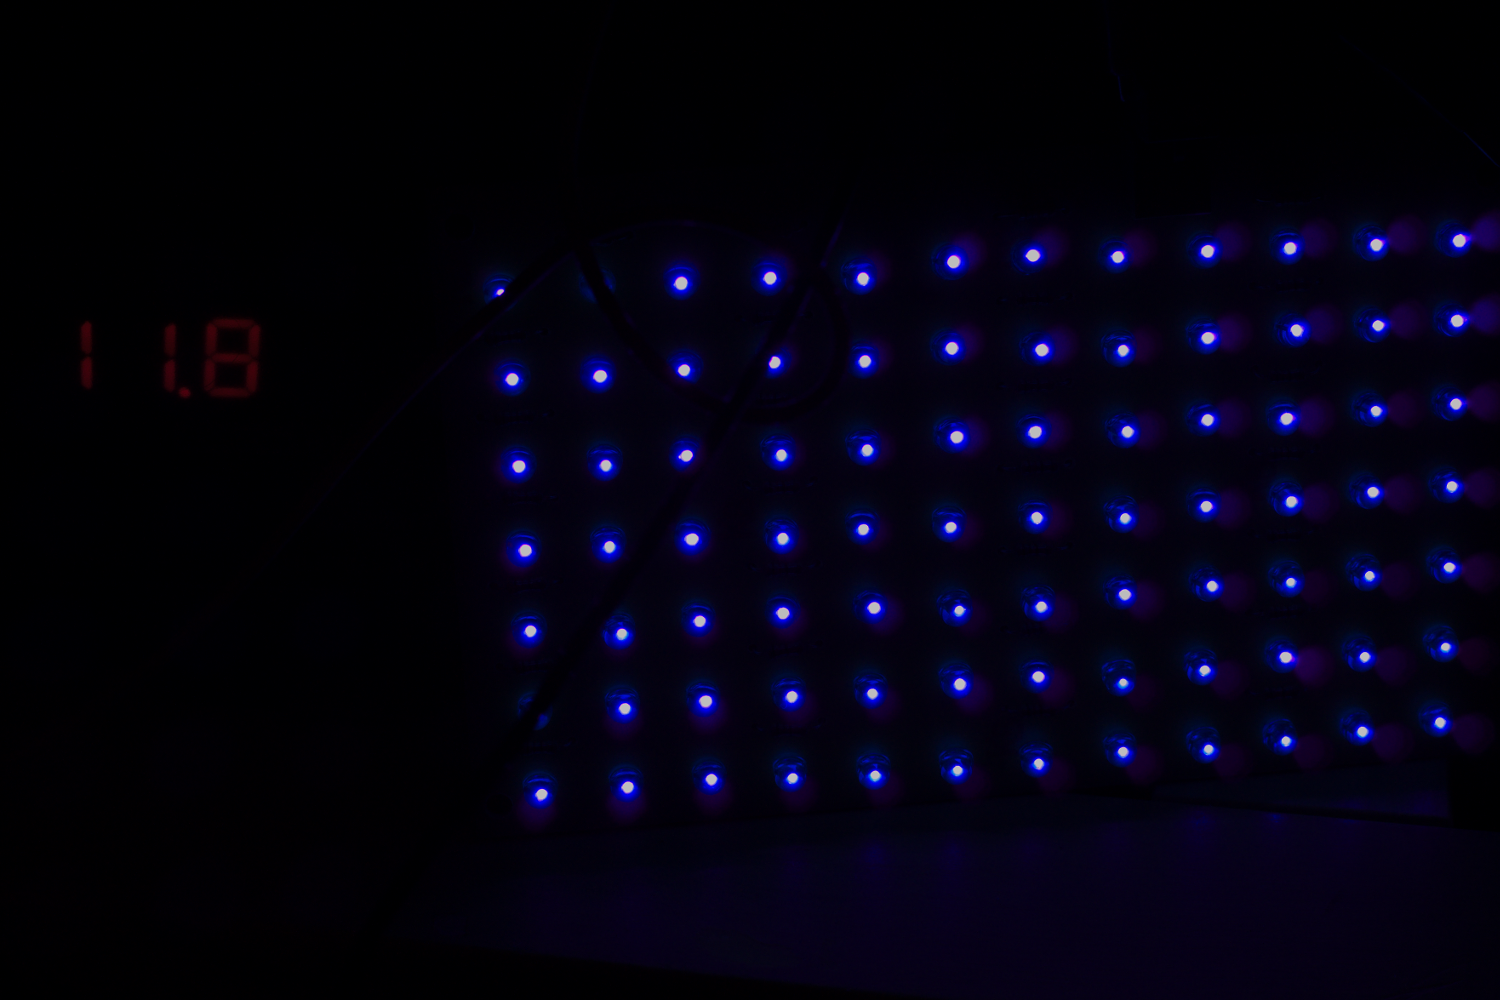 UV LED PCB Exposure Box